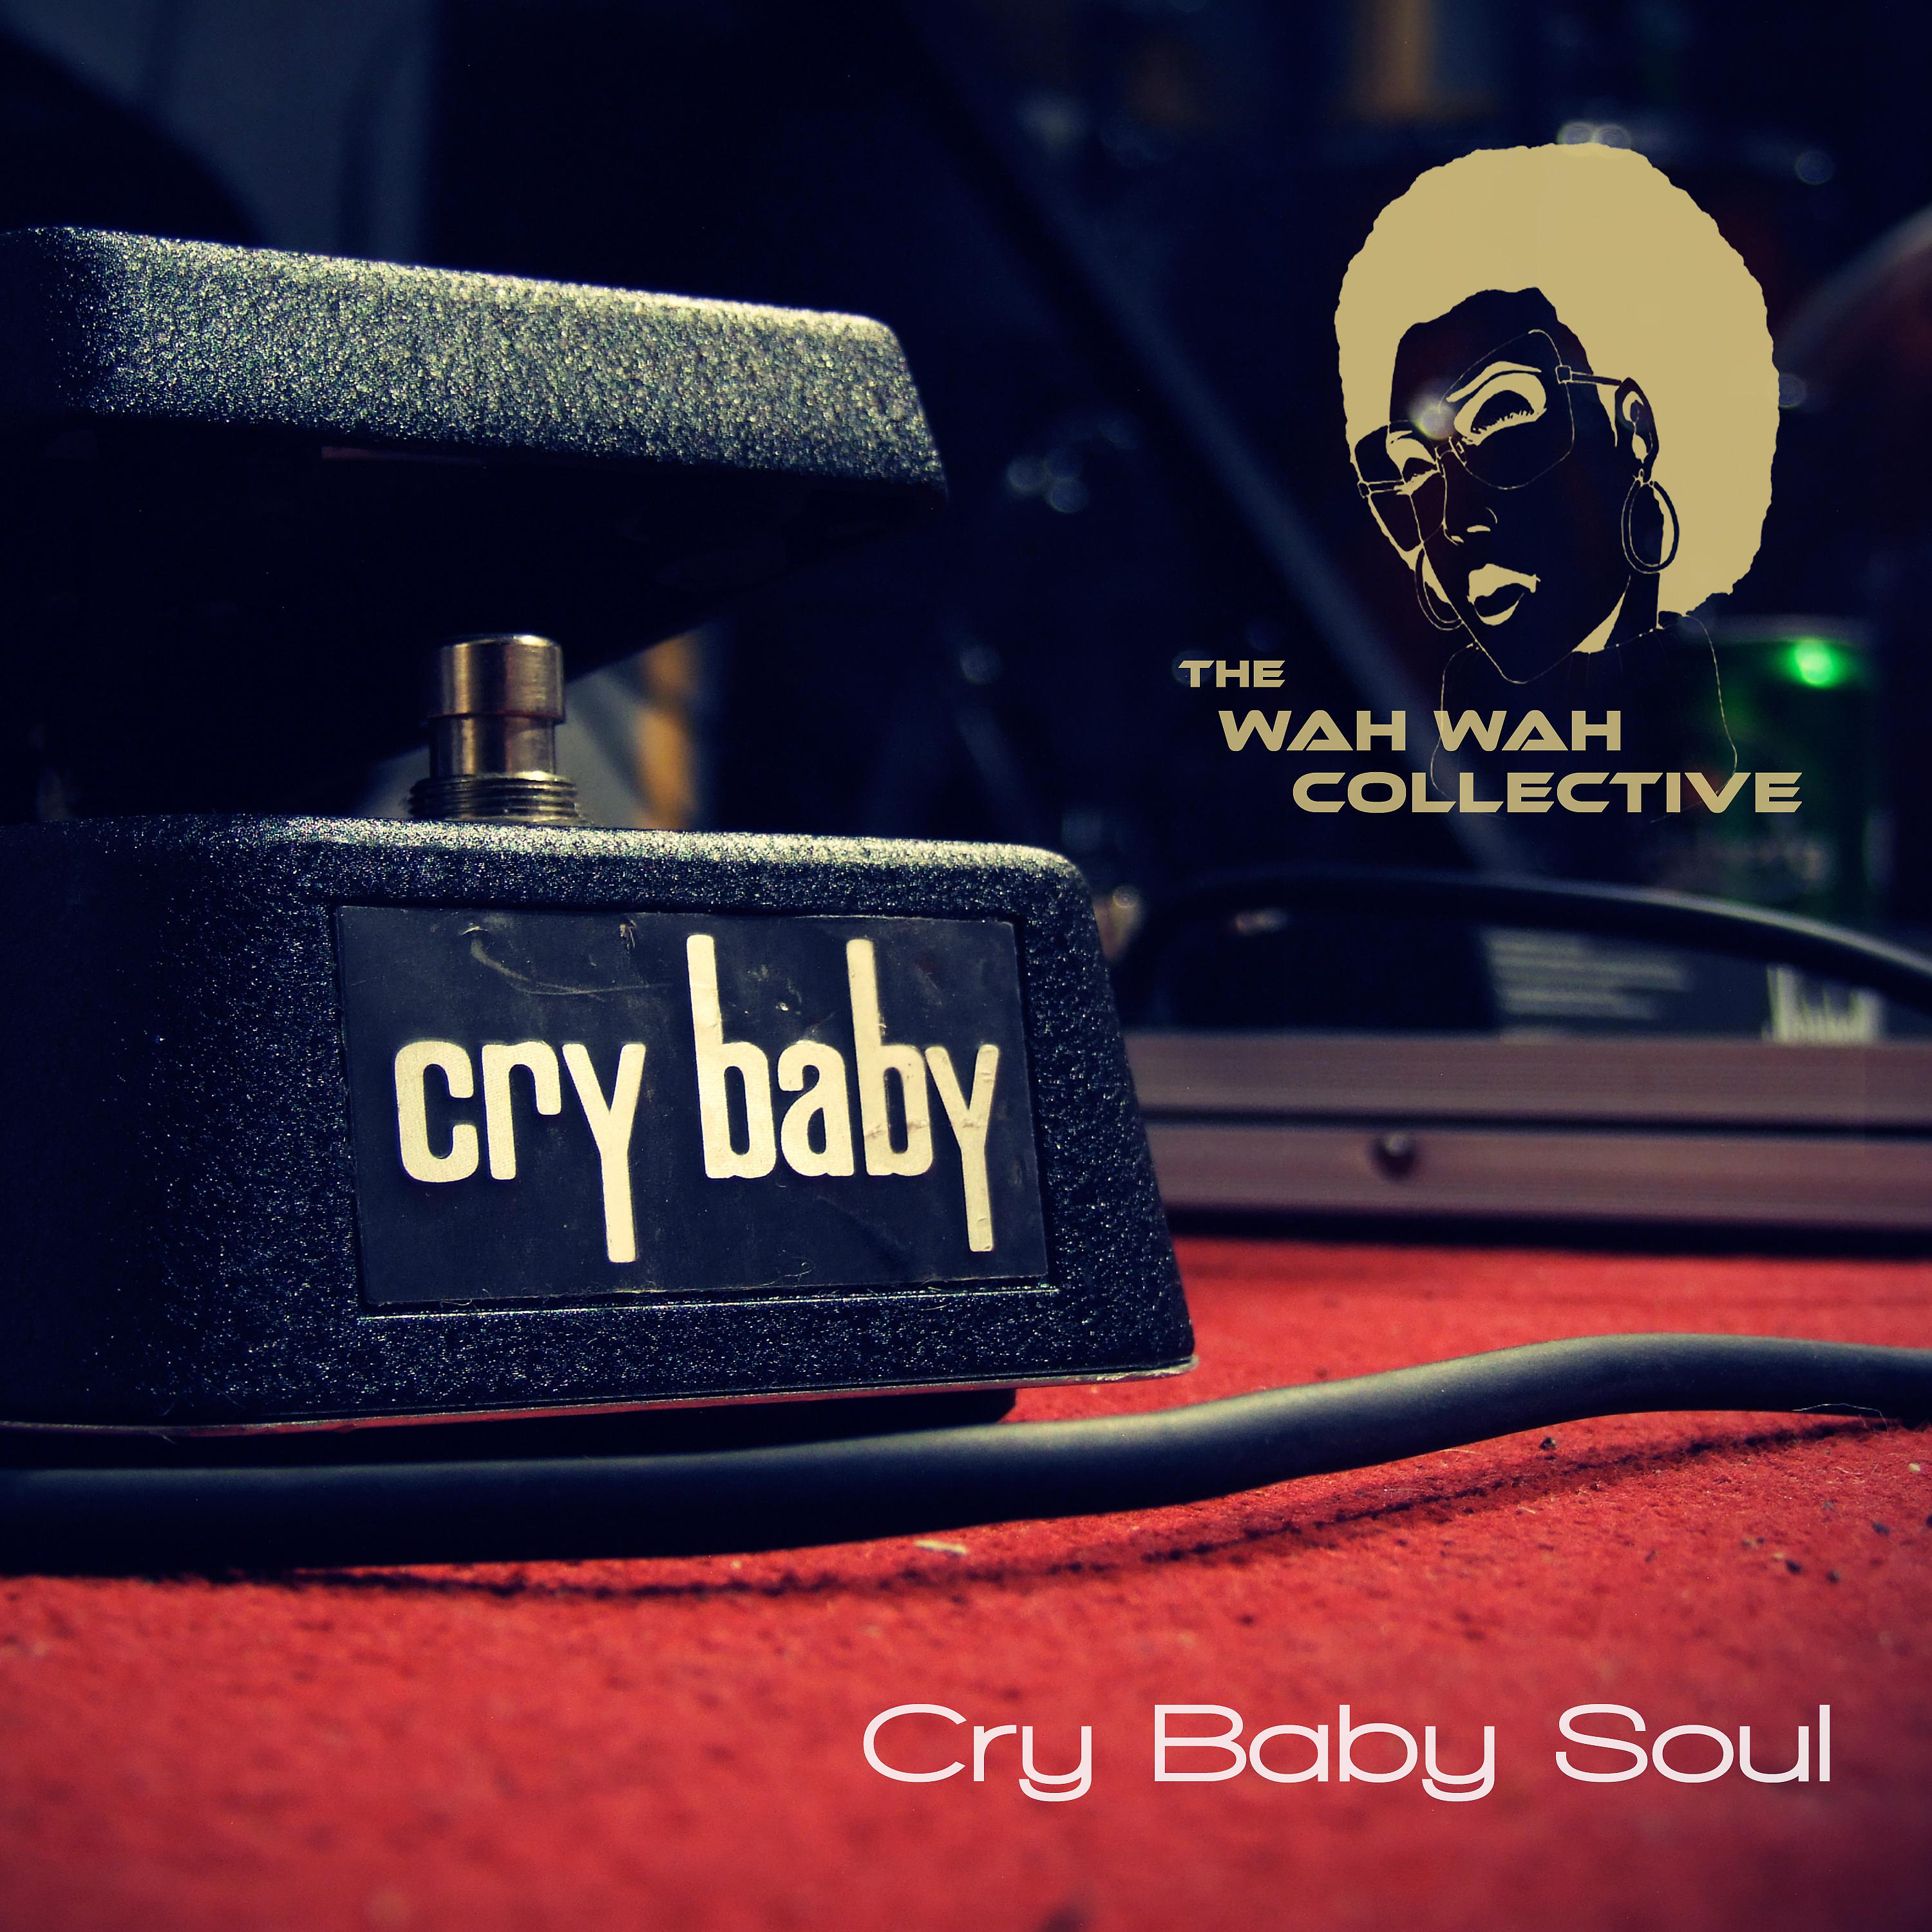 Wah Wah Wah надпись. Край соул. Cry Baby альбом. Wah Wah World заставка. Baby soul